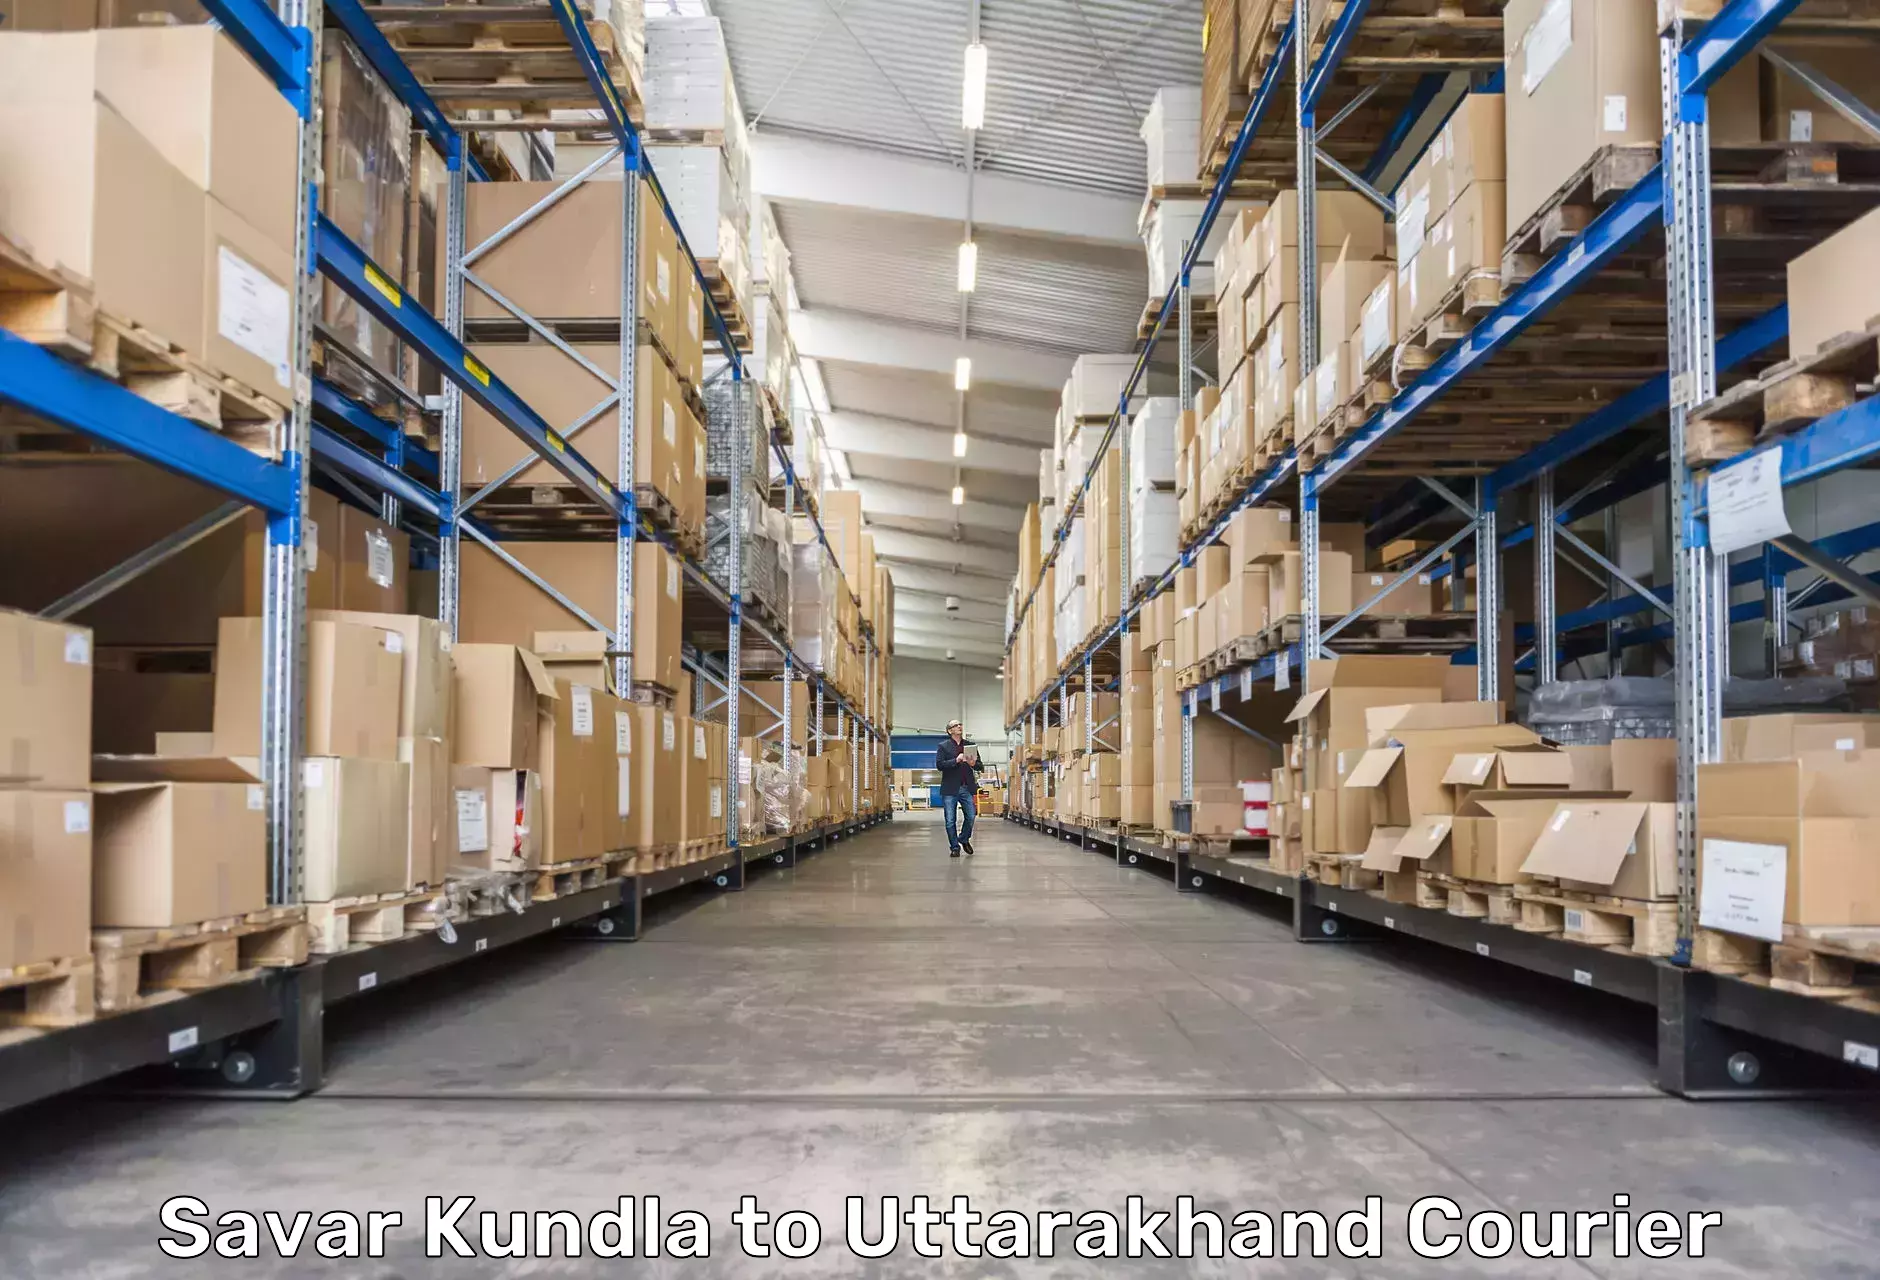 Cargo delivery service Savar Kundla to Pauri